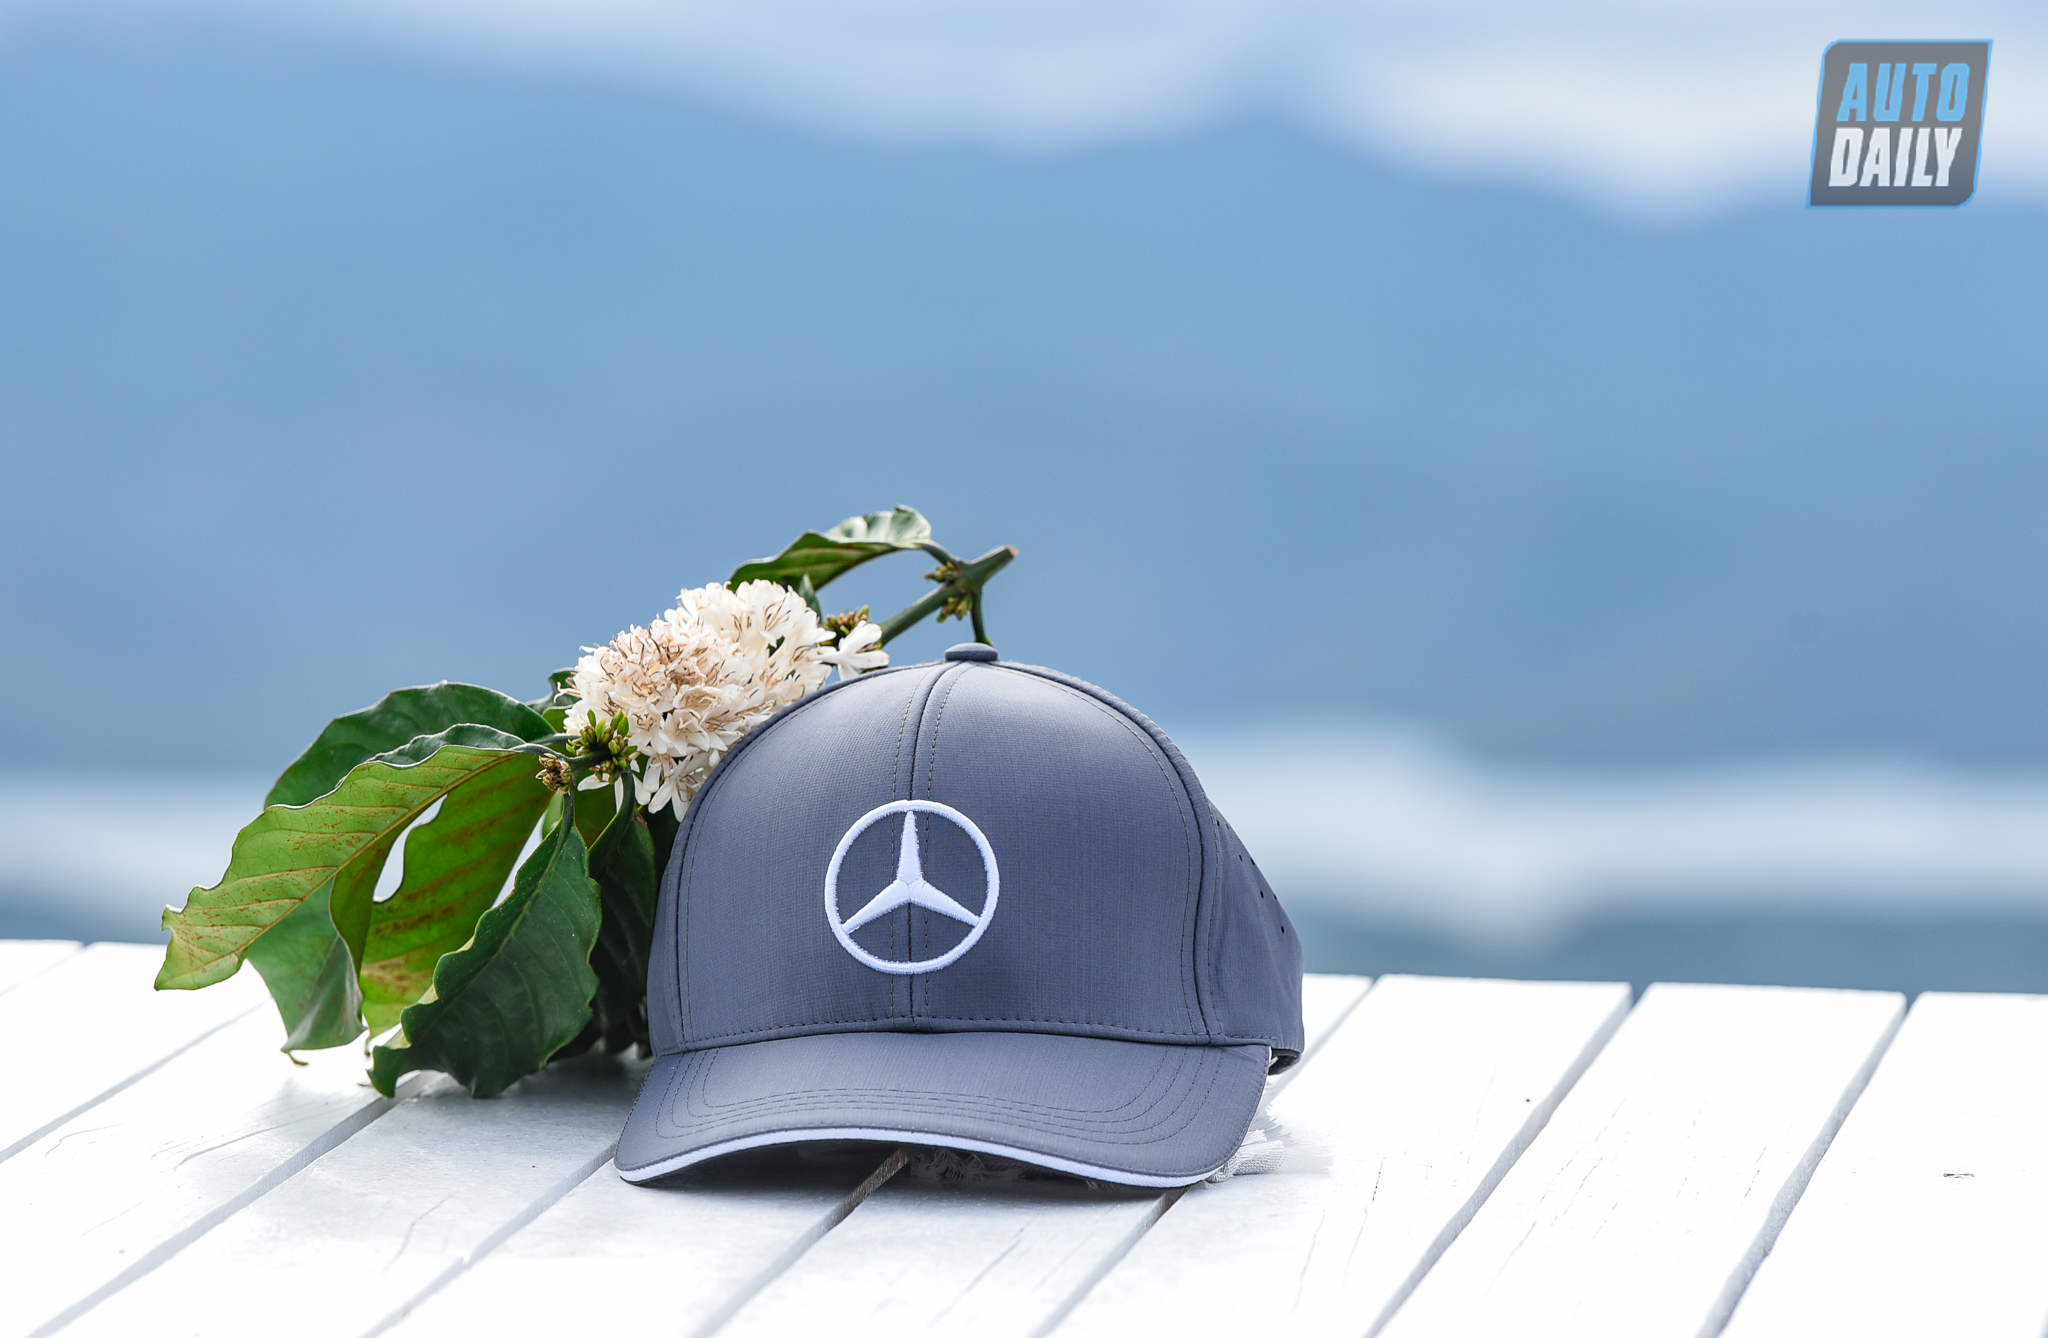 Mercedes-Heritage Photo Tour 2020: Du khảo giữa mùa hoa file3995.jpg